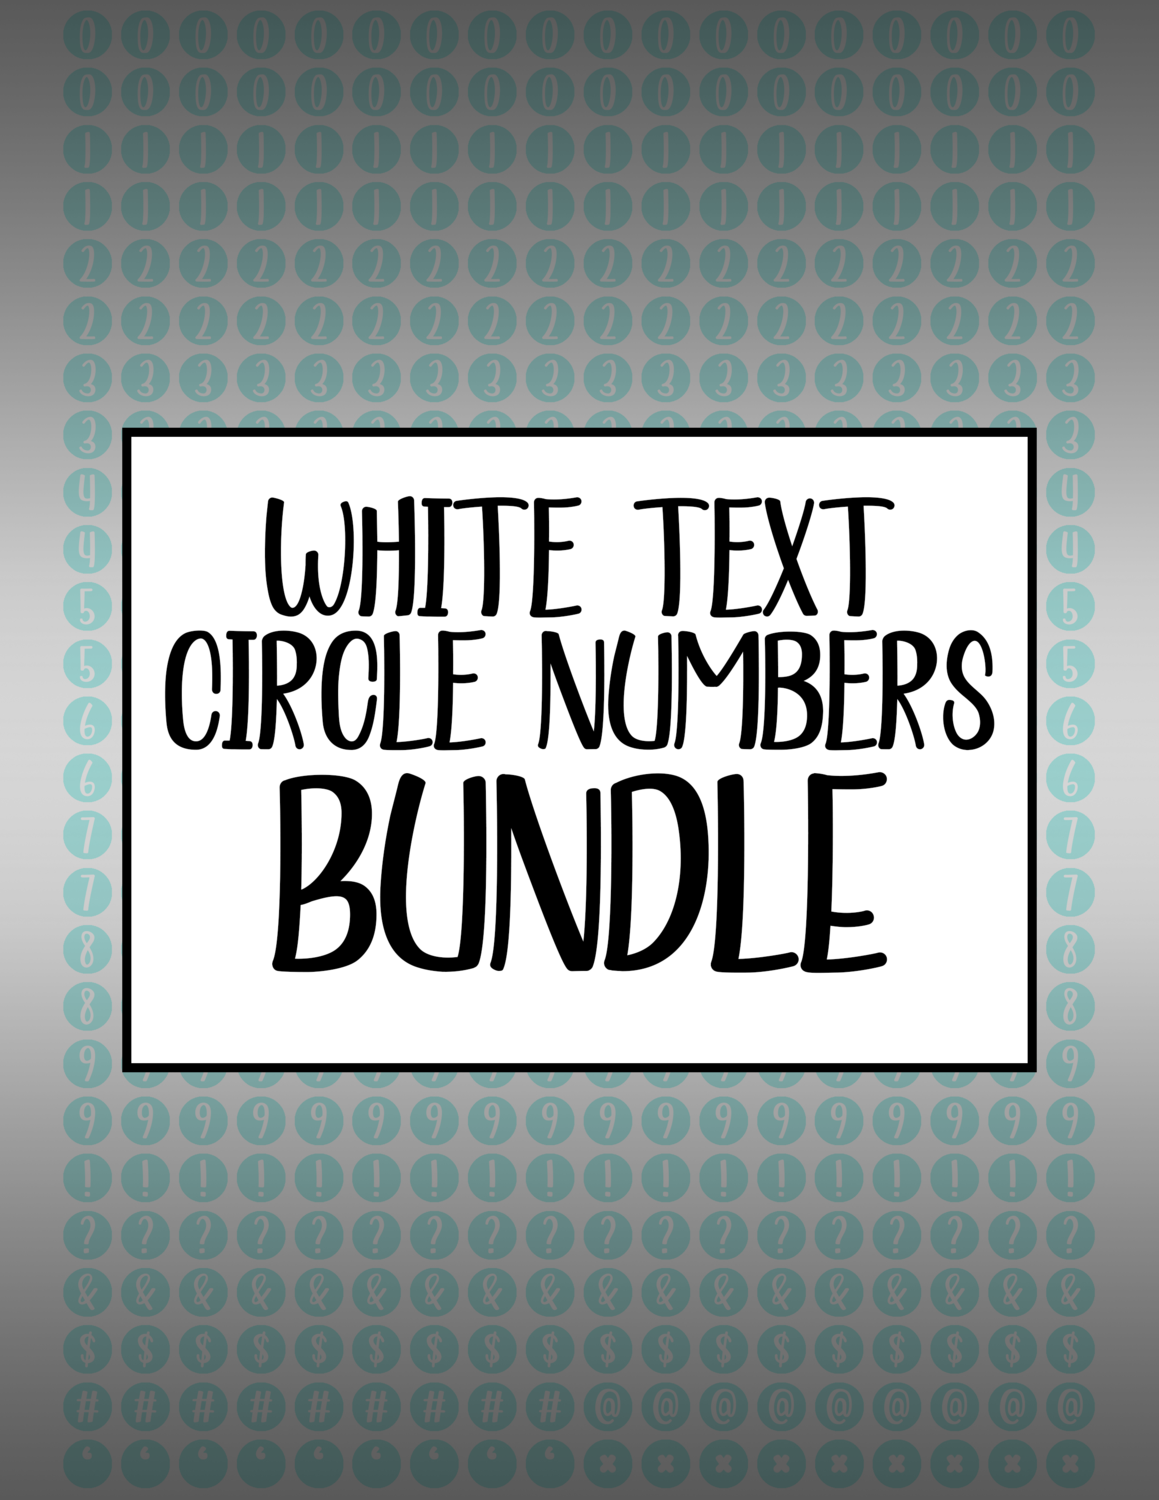 Bundle #24 "Feeling Good" Circle Numbers - White Text